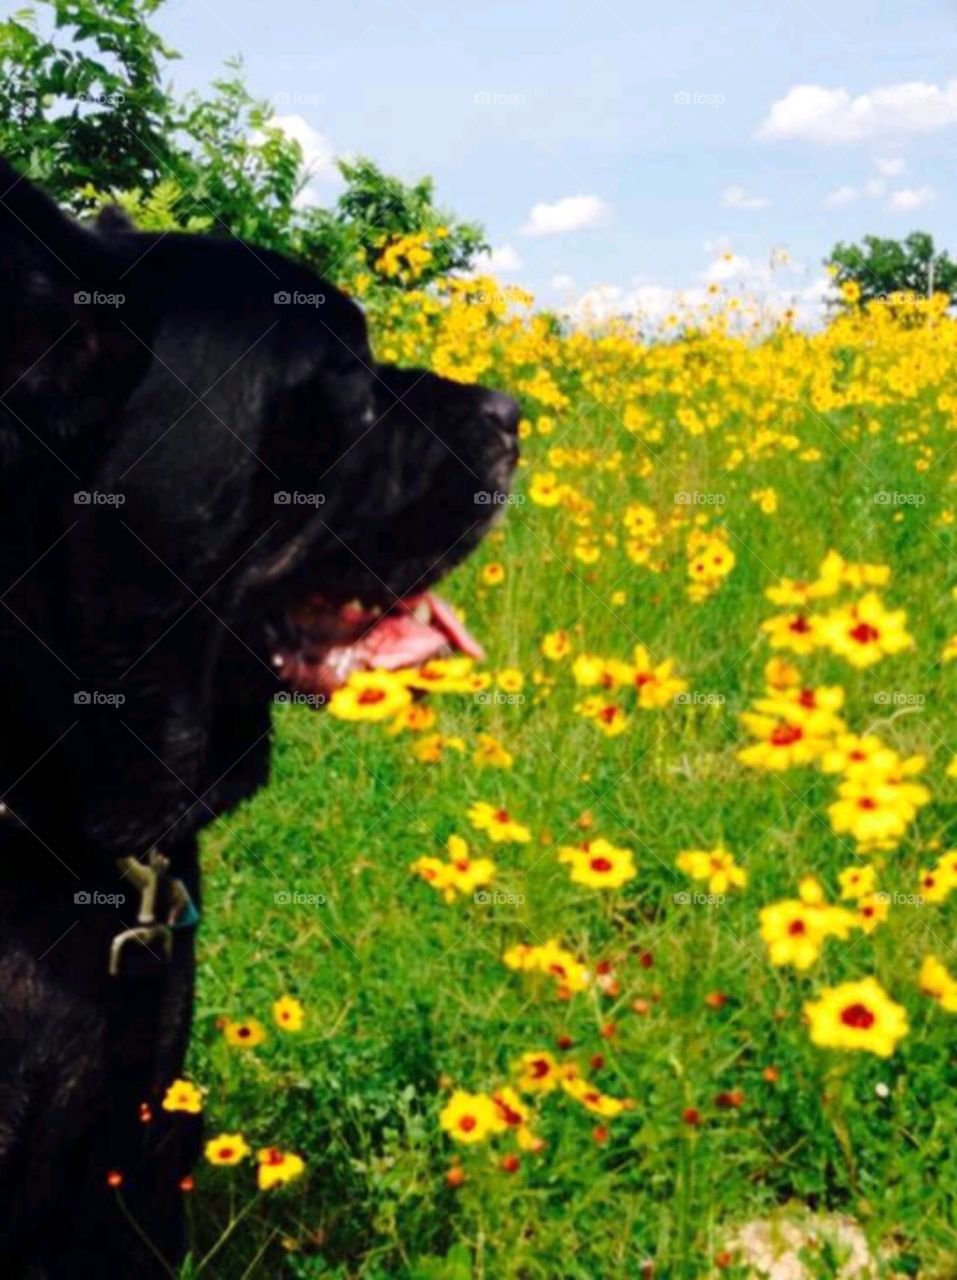 Dog . Dog in field full of flowers 